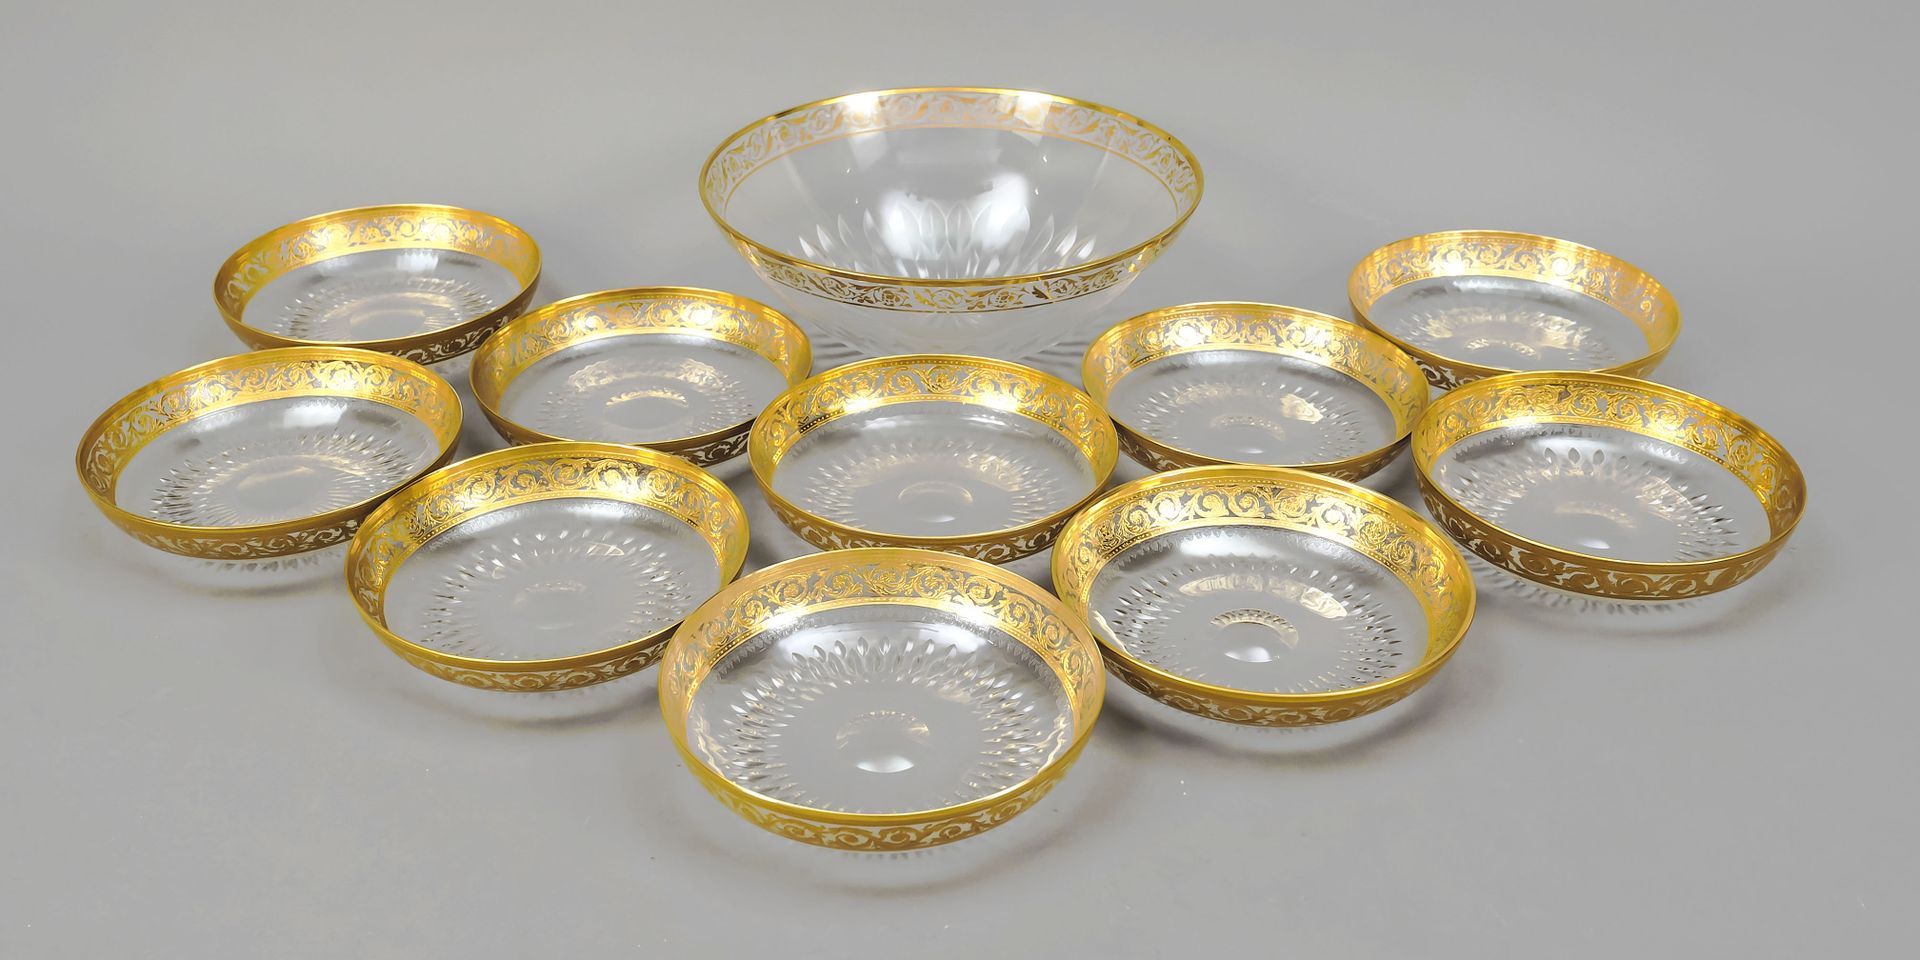 Null 11件套玻璃制品，法国，20世纪下半叶，可能是圣路易斯（无标记），包括一个碗和10个小碗，透明玻璃，有金色装饰，直径分别为14和22厘米。